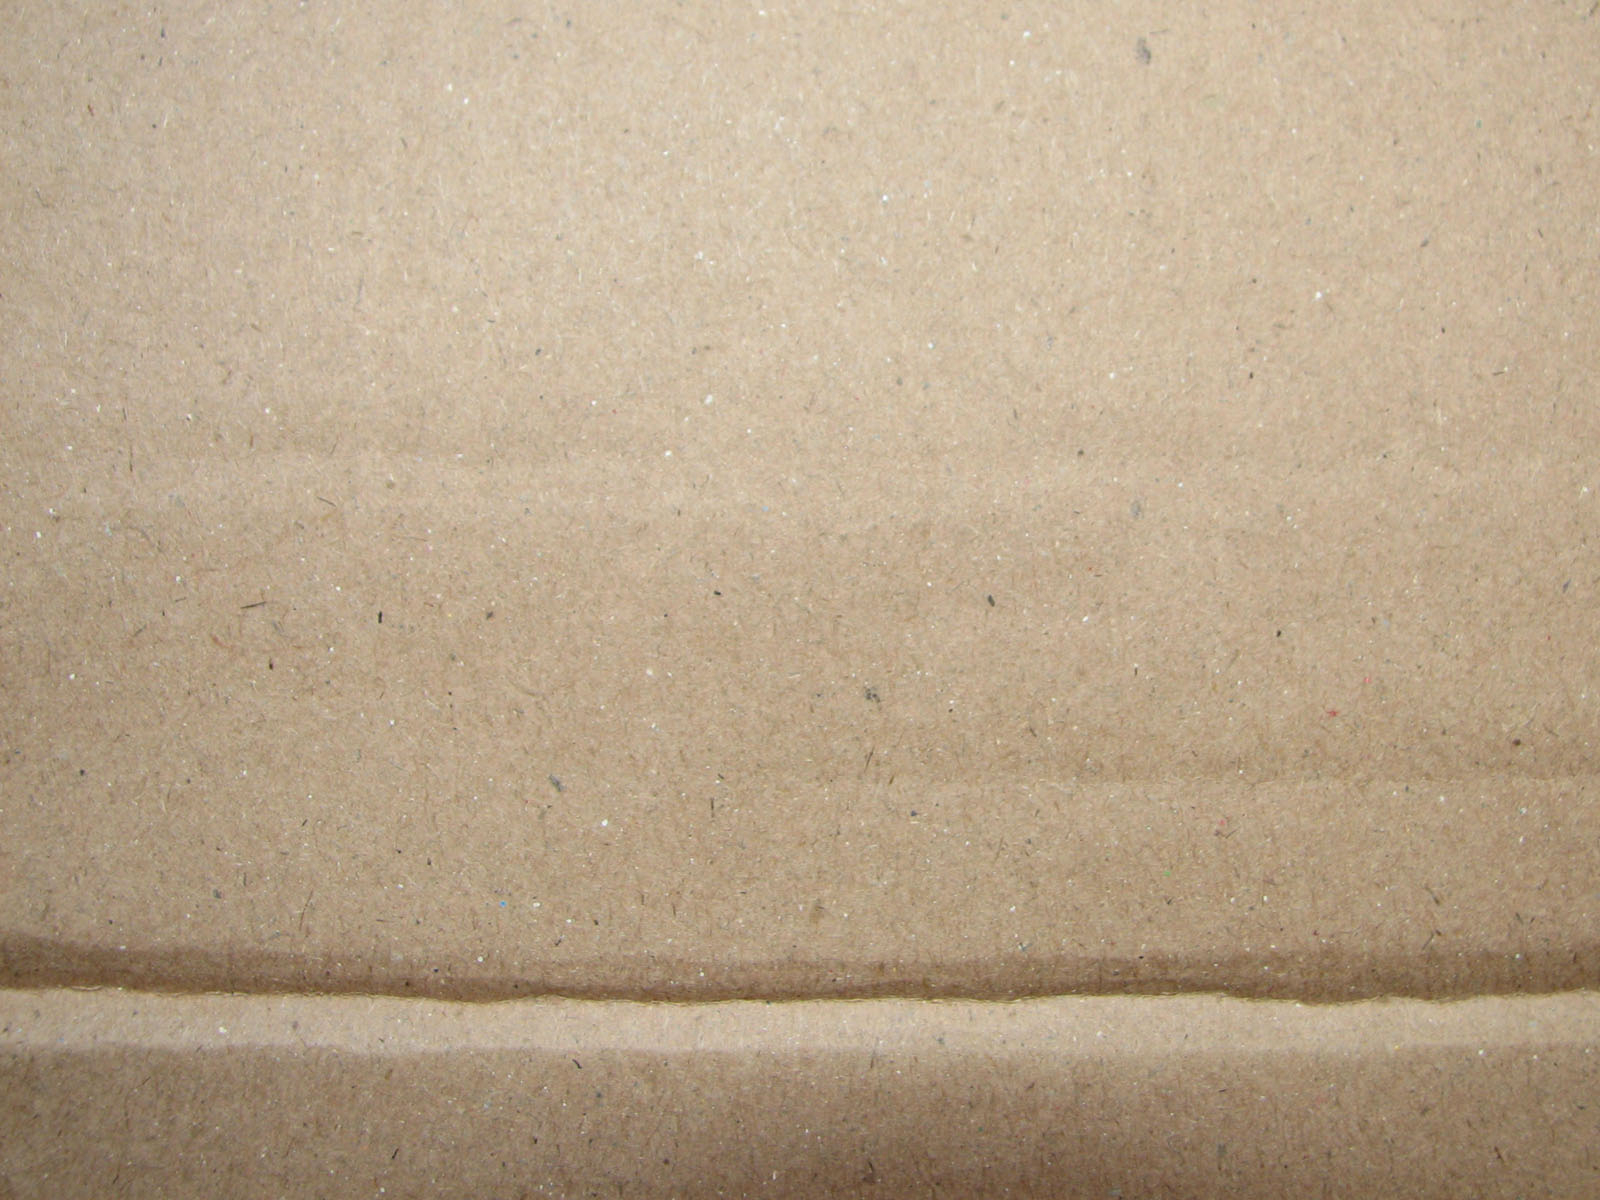 Cardboard-06 by 